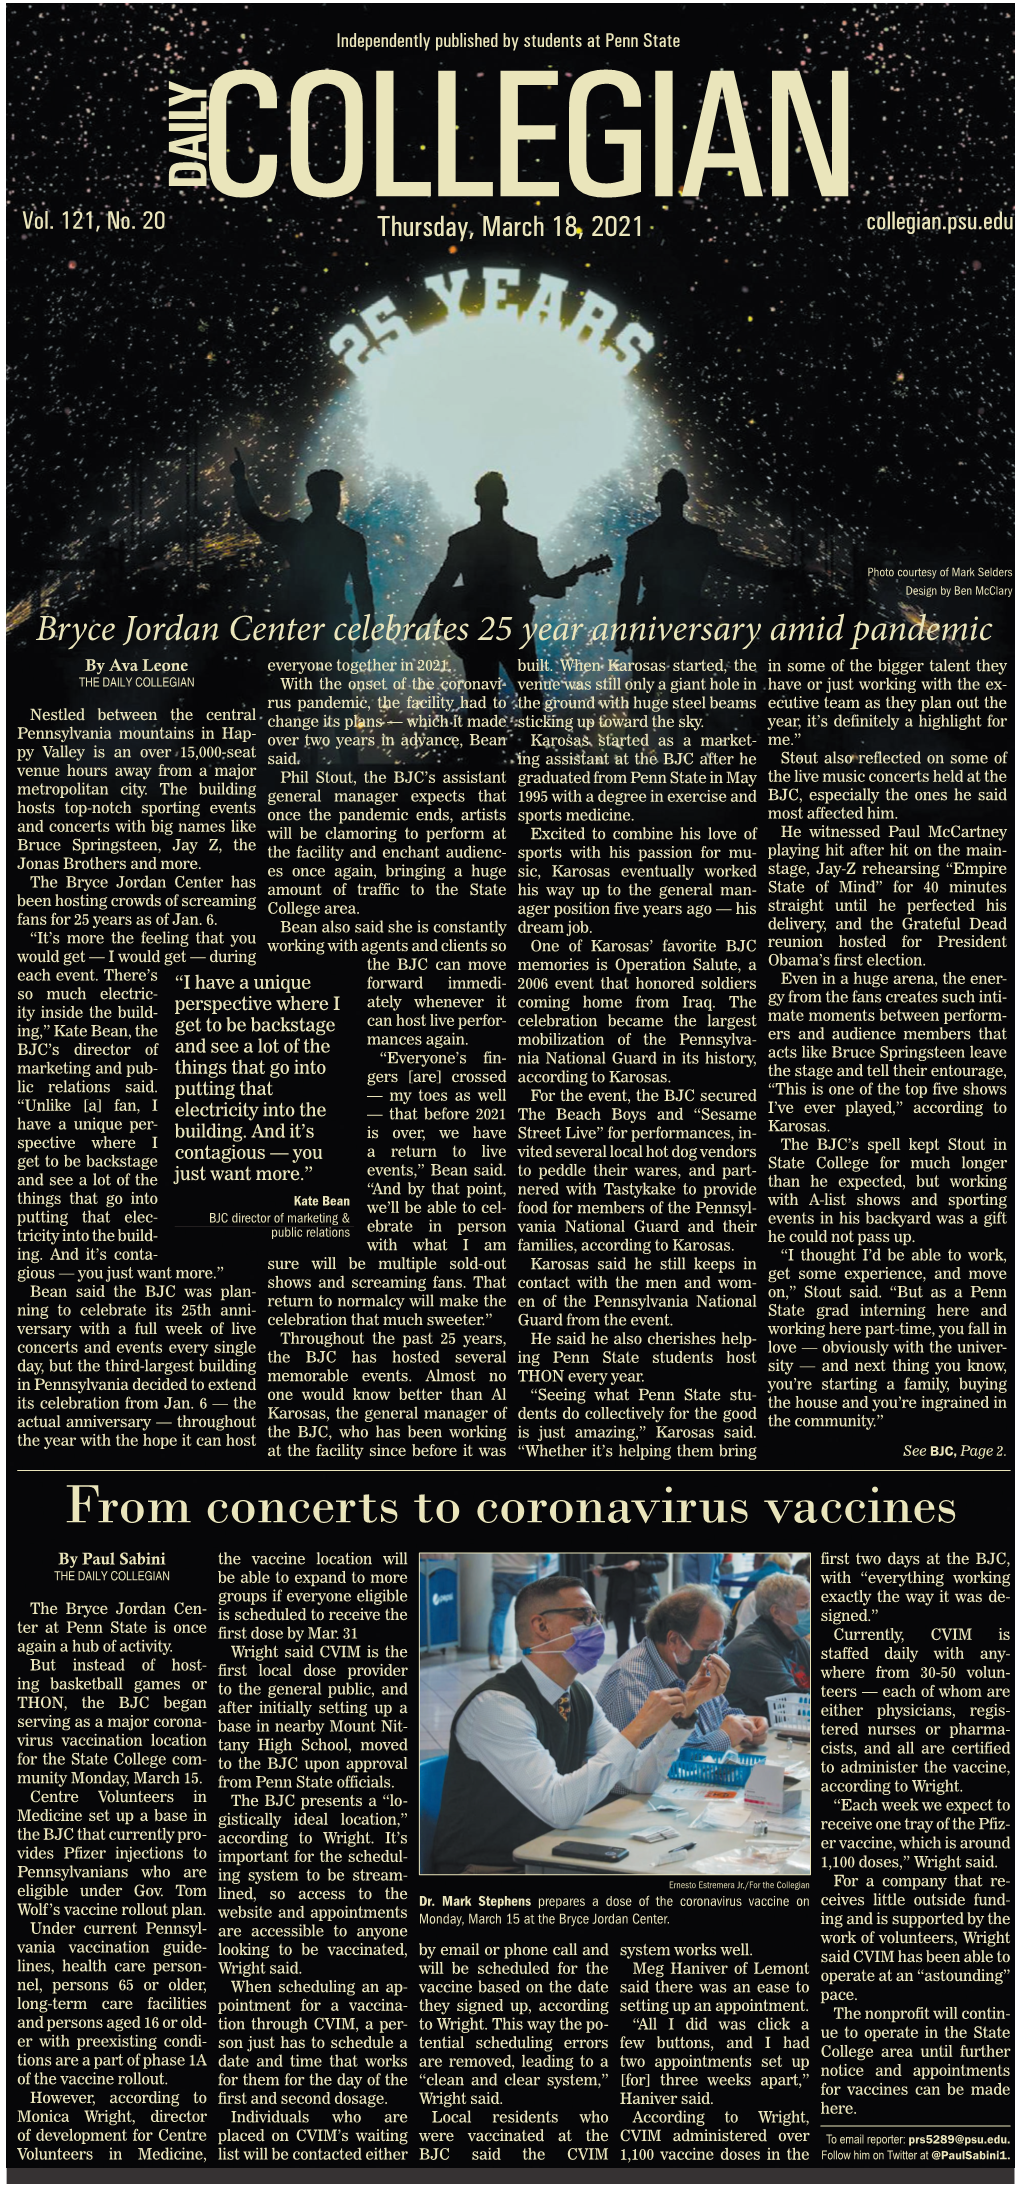 From Concerts to Coronavirus Vaccines